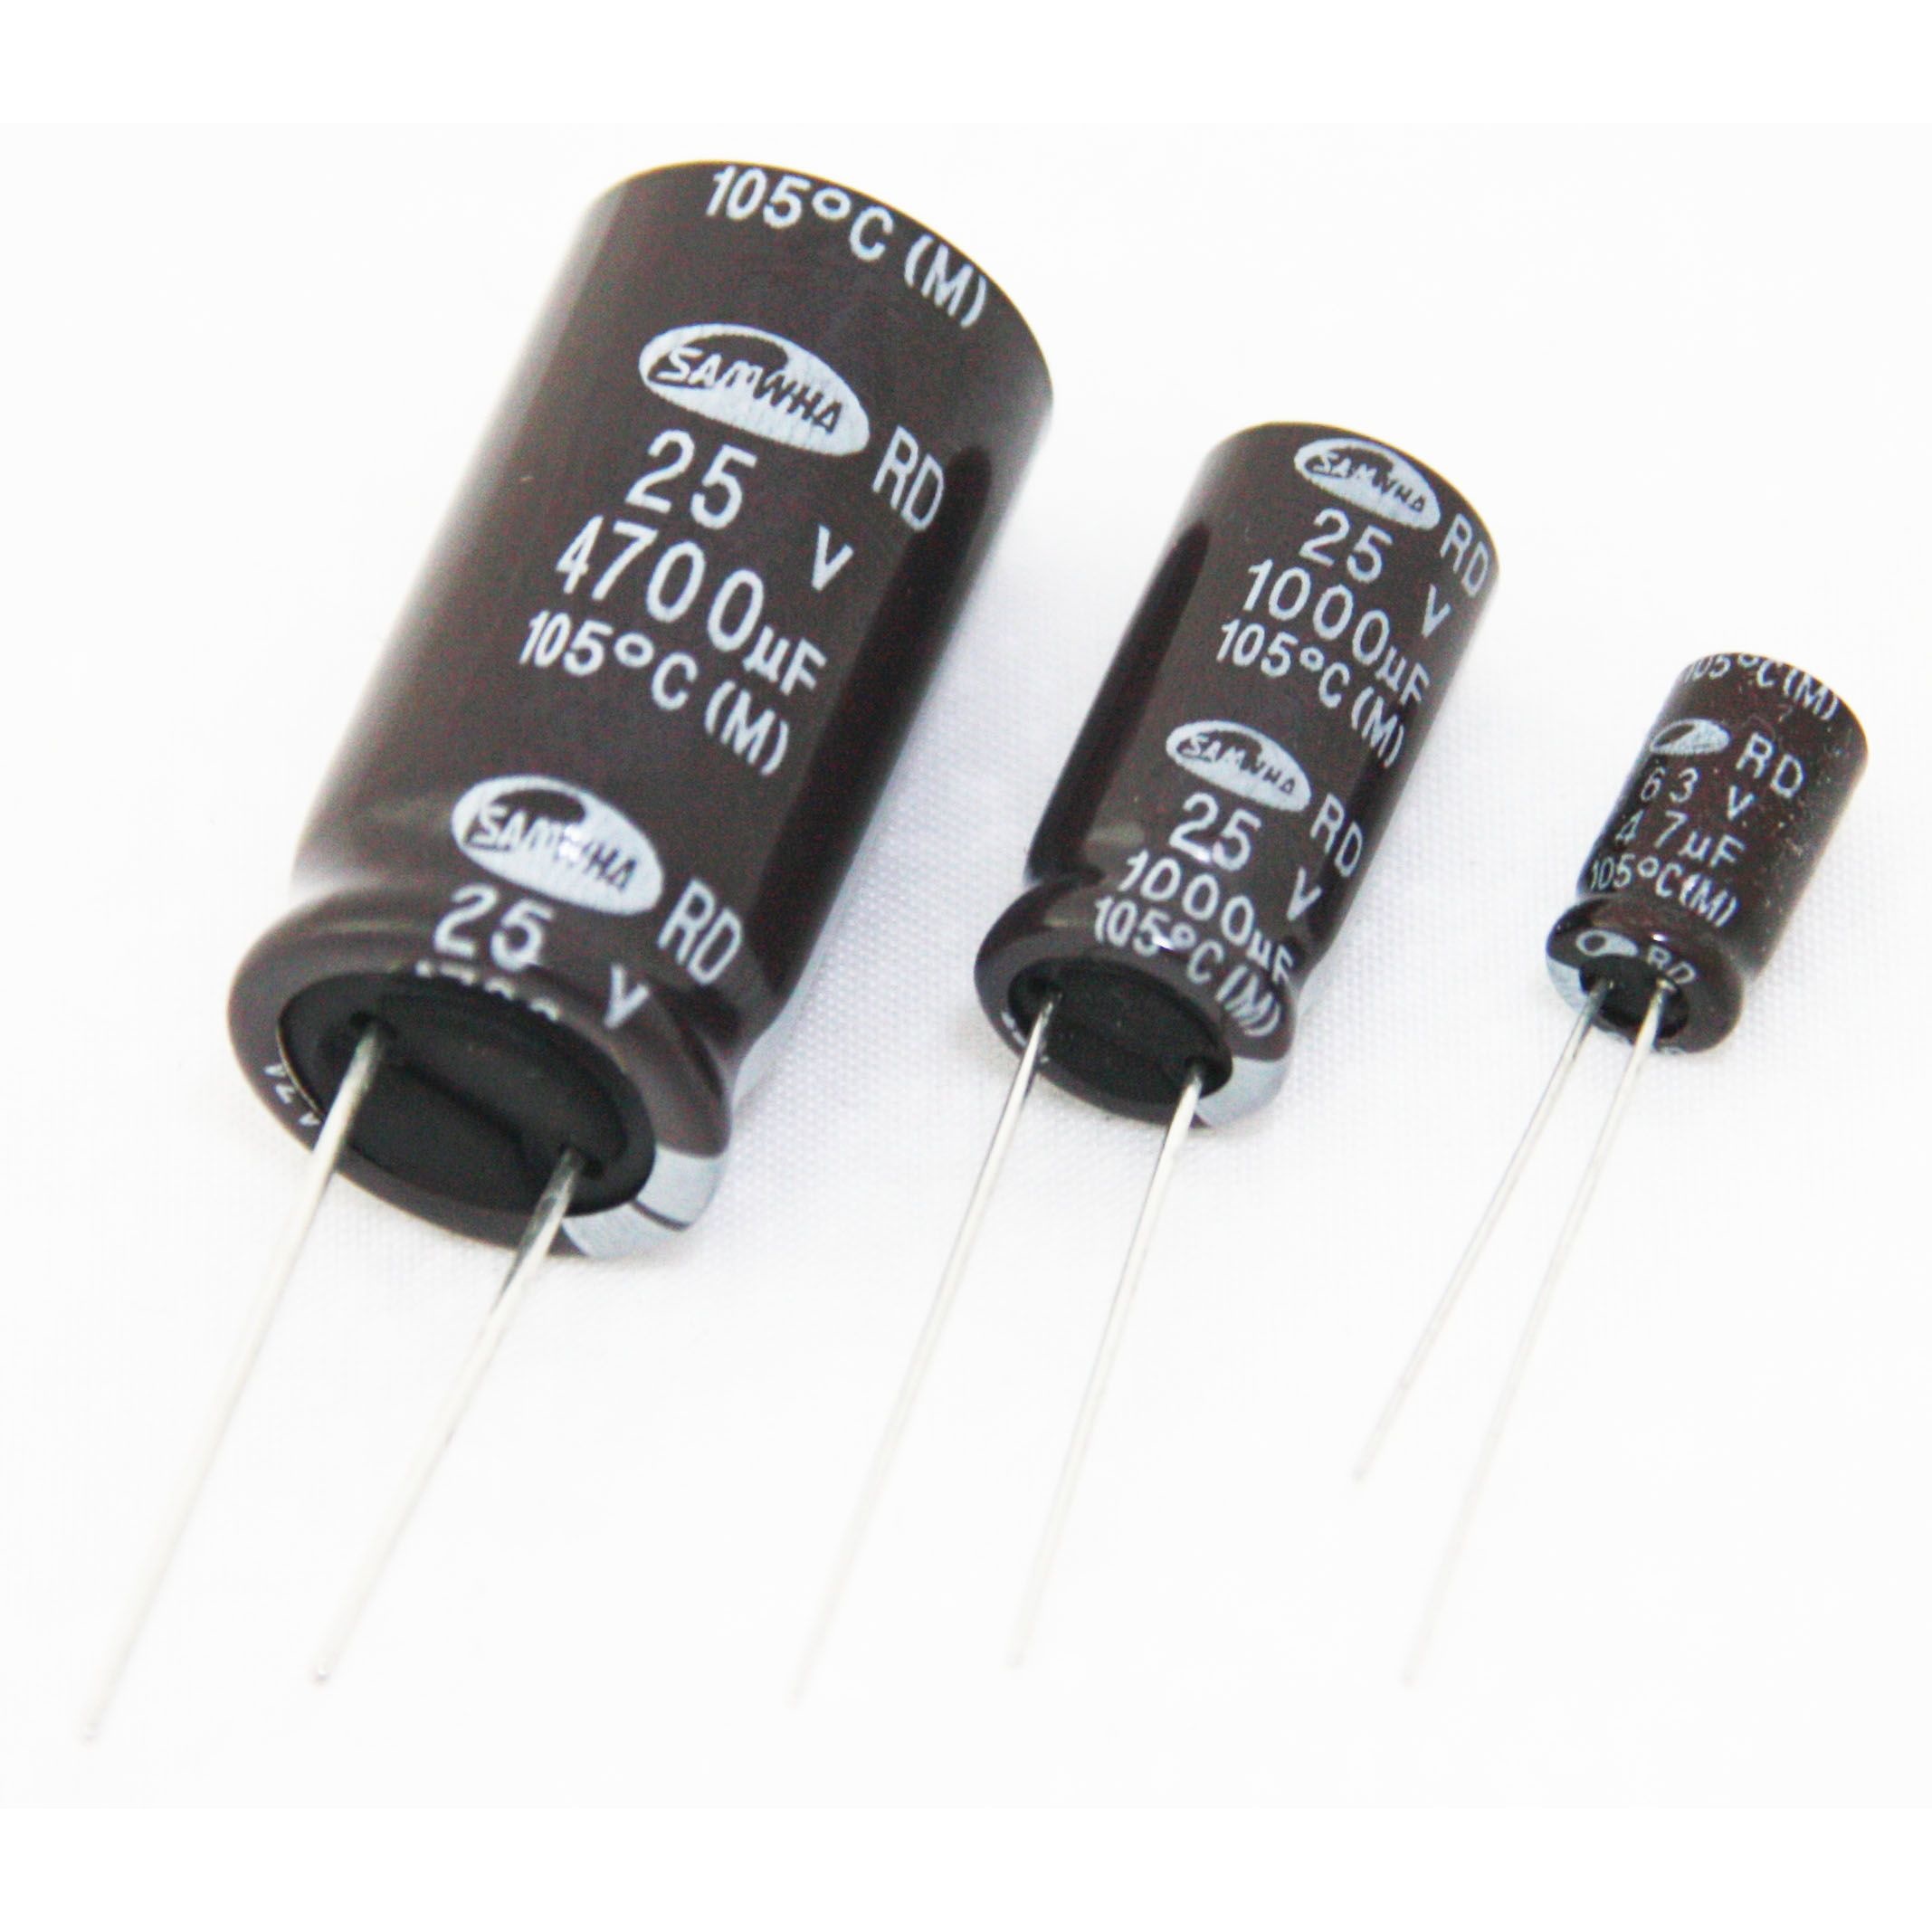 Electrolytic capacitor 105° 4700uF-16V